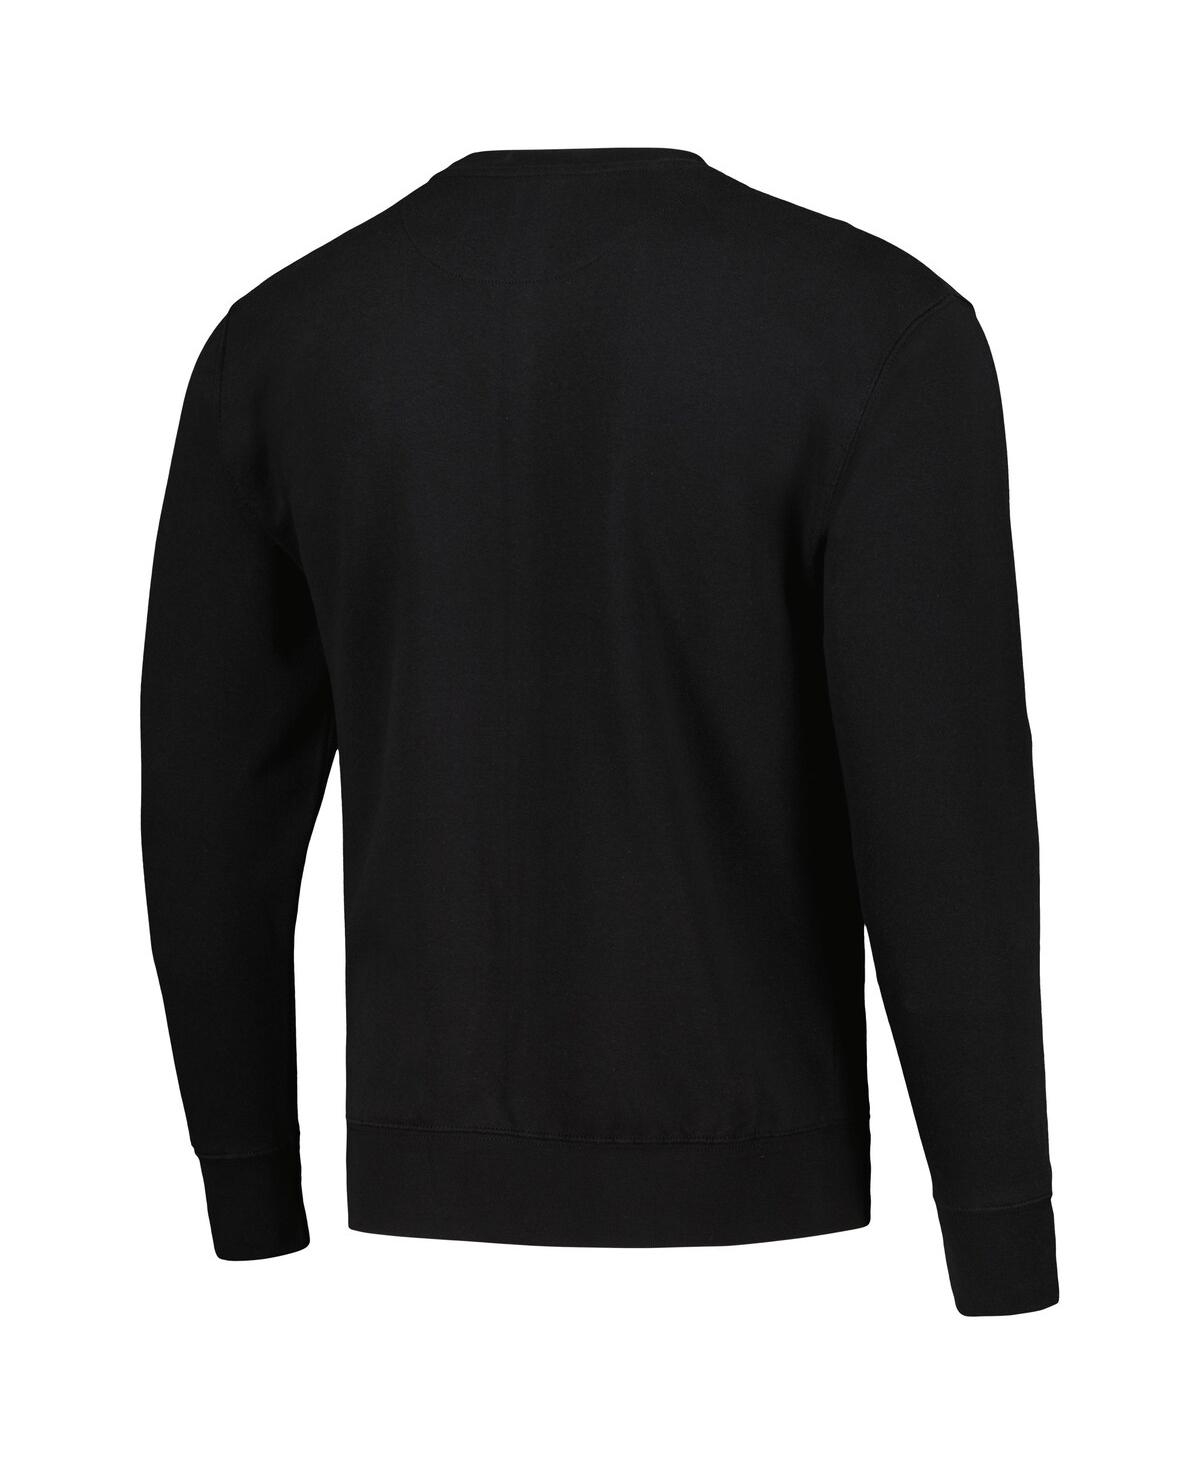 Shop American Classics Men's Black Acdc Back In Black Pullover Sweatshirt